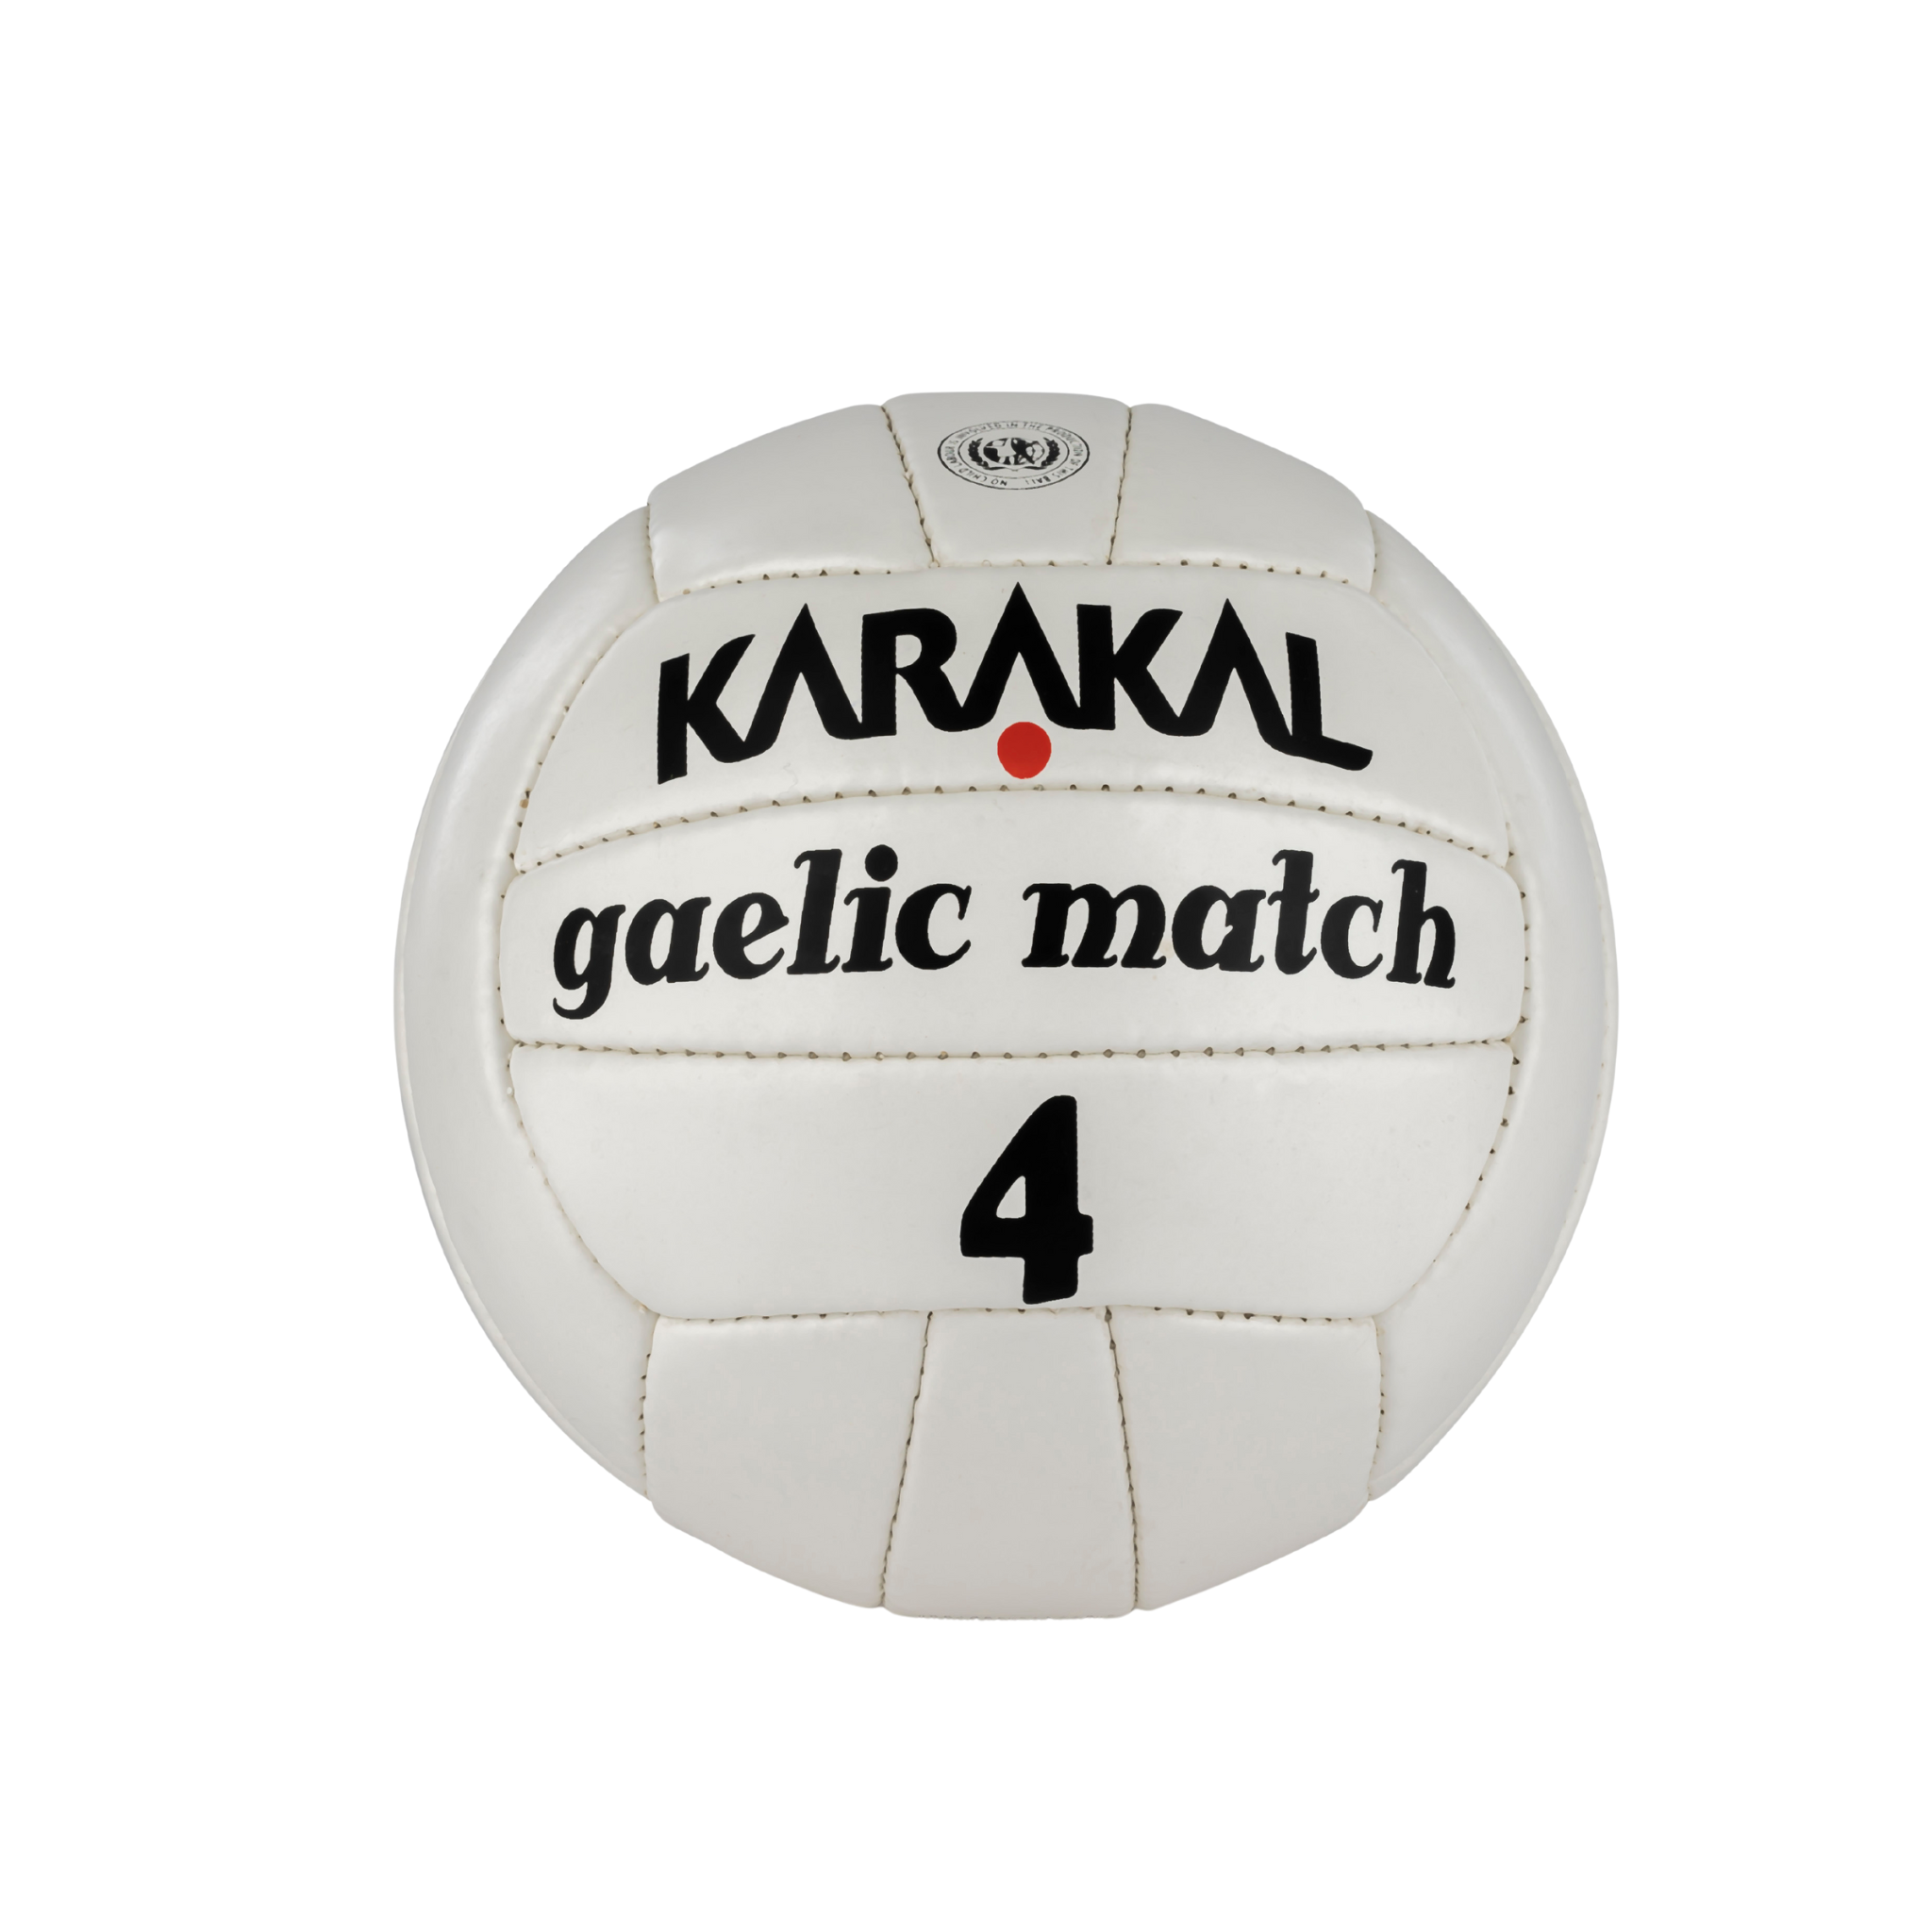 Karakal Gaelic Match Ball Size 4 - 10 Pack